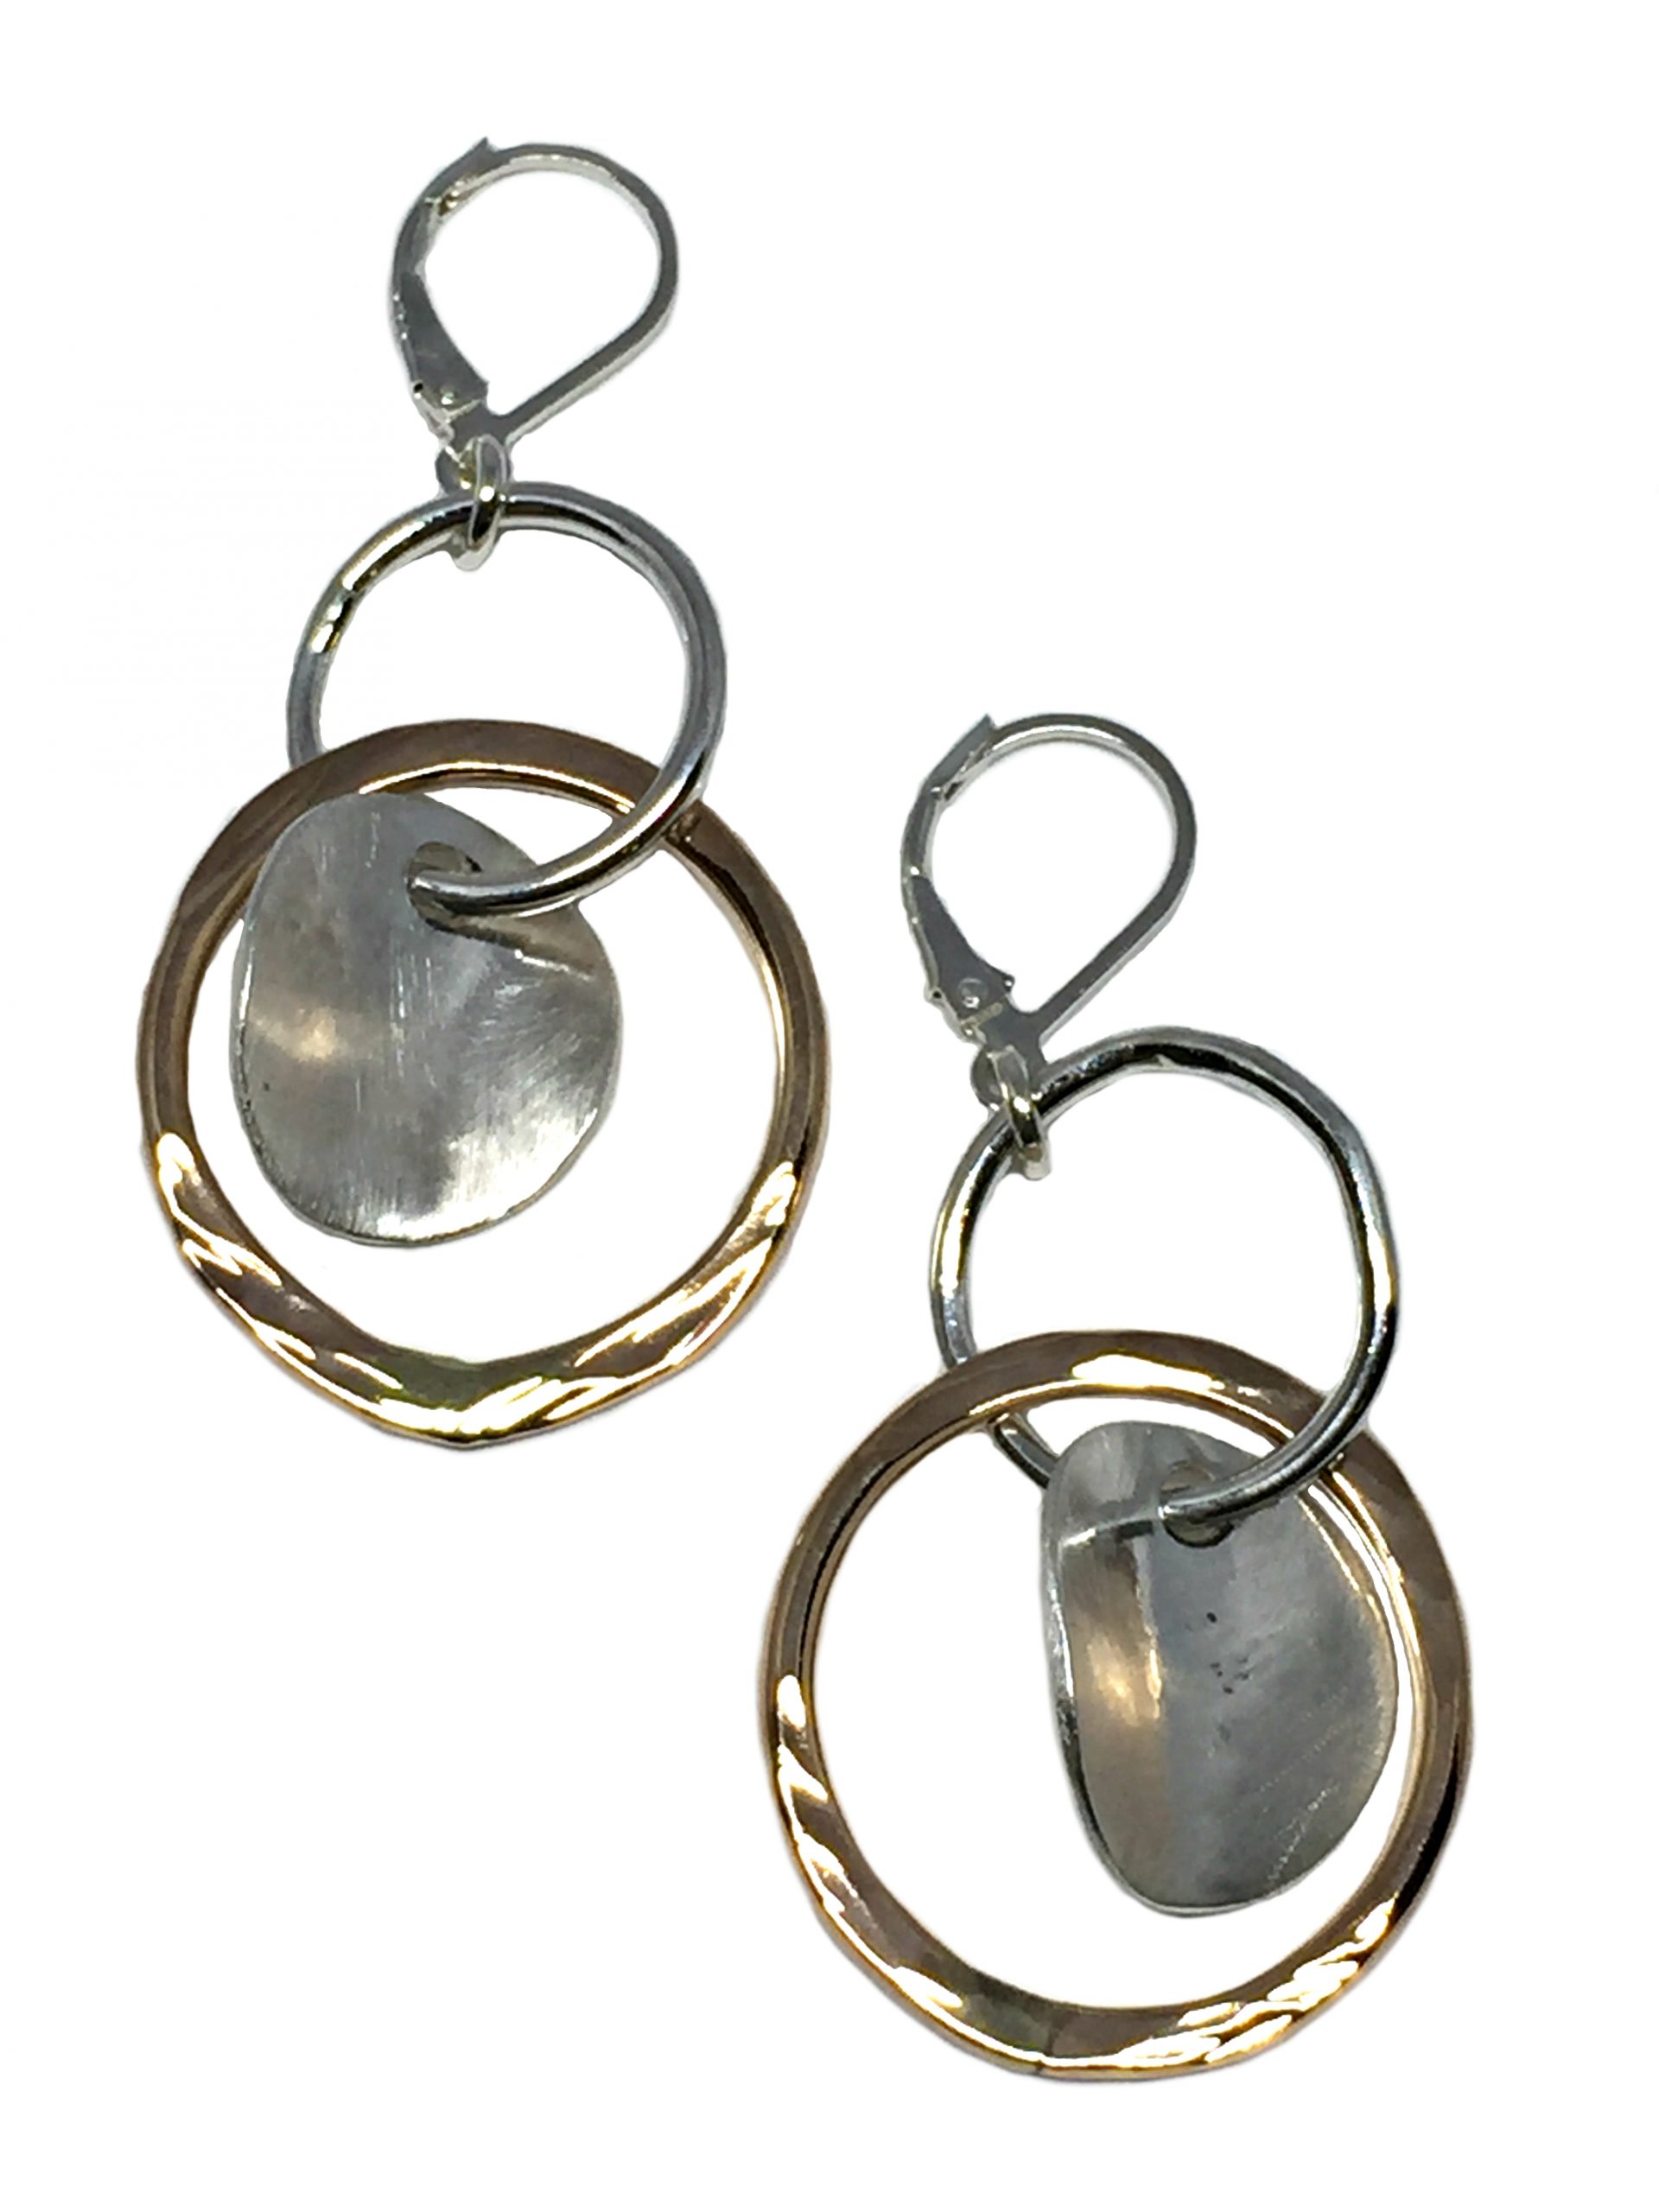 Sterling Silver + Bronze Earrings by Karyn Chopik | Effusion Art Gallery + Cast Glass Studio, Invermere BC